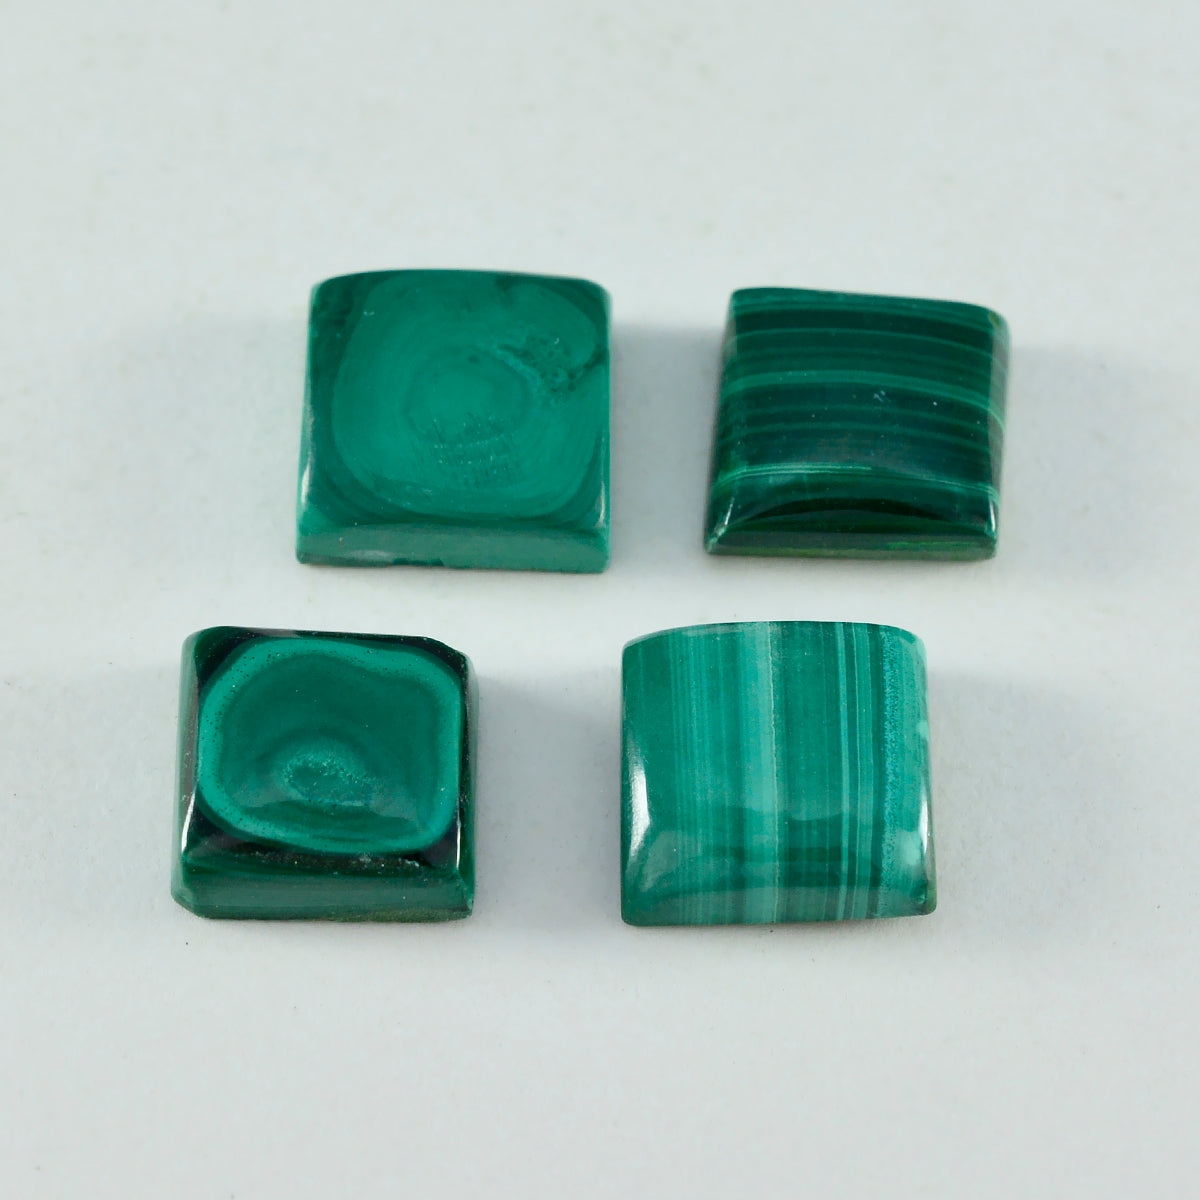 riyogems 1pc cabochon di malachite verde 9x9 mm di forma quadrata, una pietra preziosa di qualità